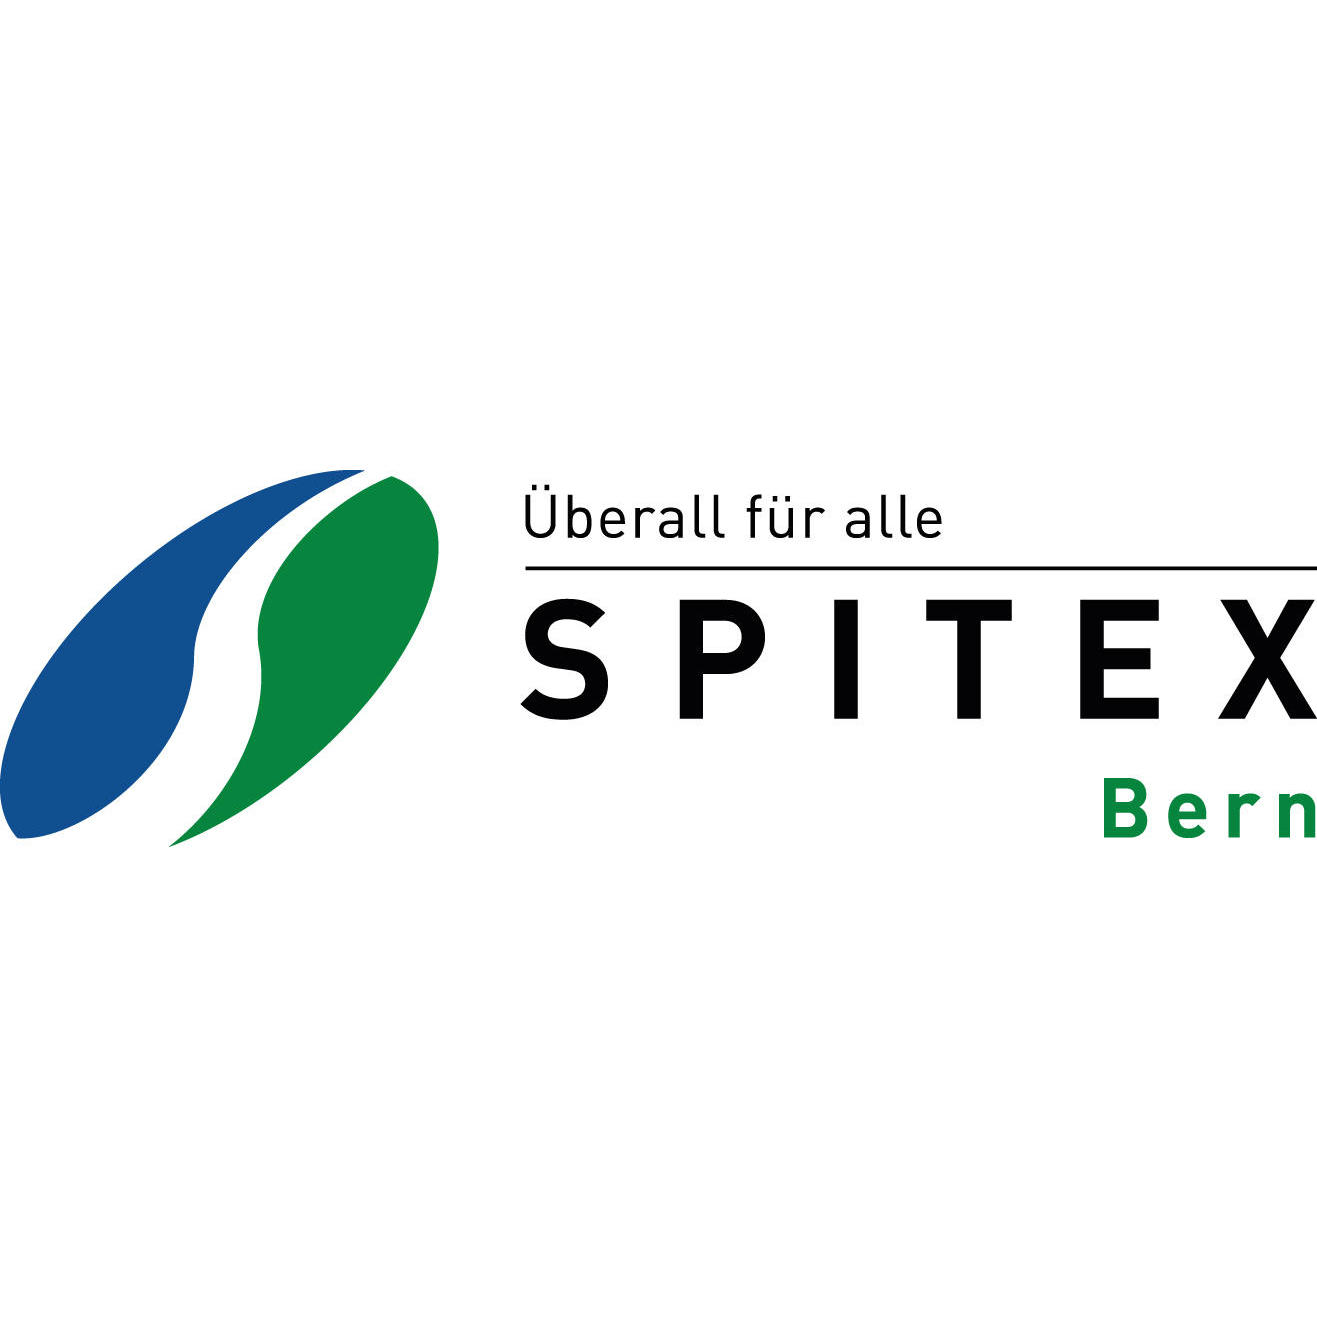 SPITEX BERN - Nursing Agency - Bern - 031 388 50 50 Switzerland | ShowMeLocal.com